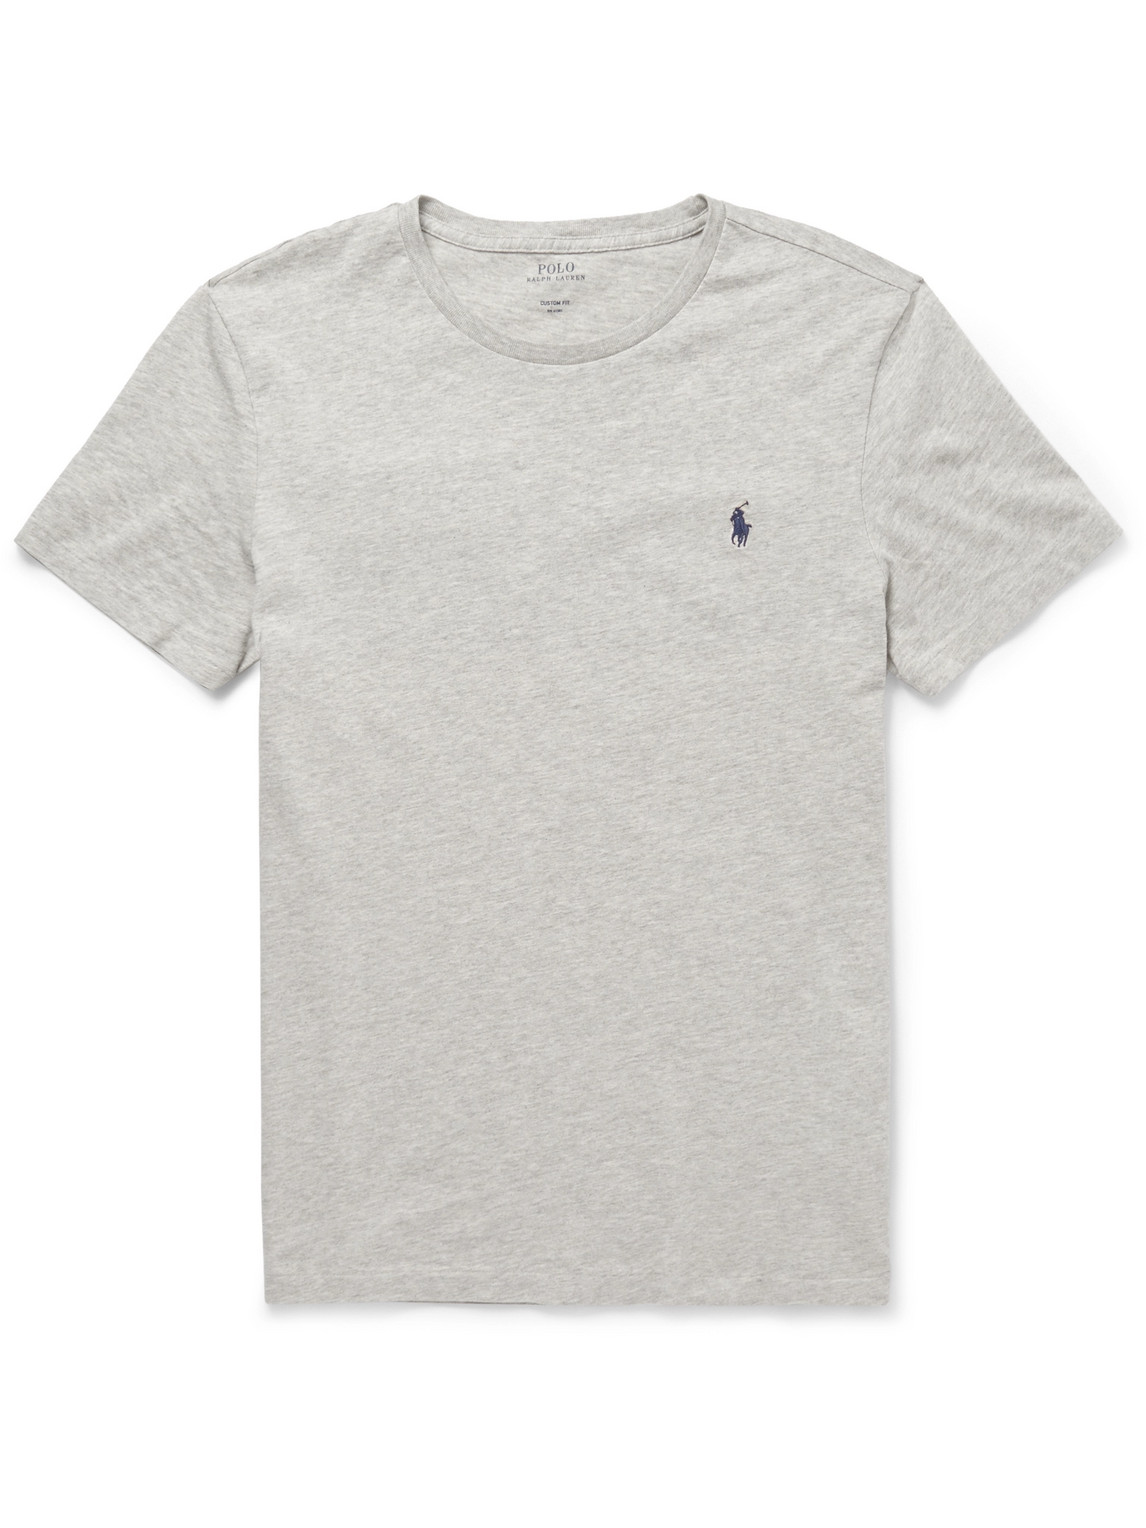 regen enz Zuiver Polo Ralph Lauren - Slim-Fit Cotton-Jersey T-Shirt - Men - Gray - XS for Men